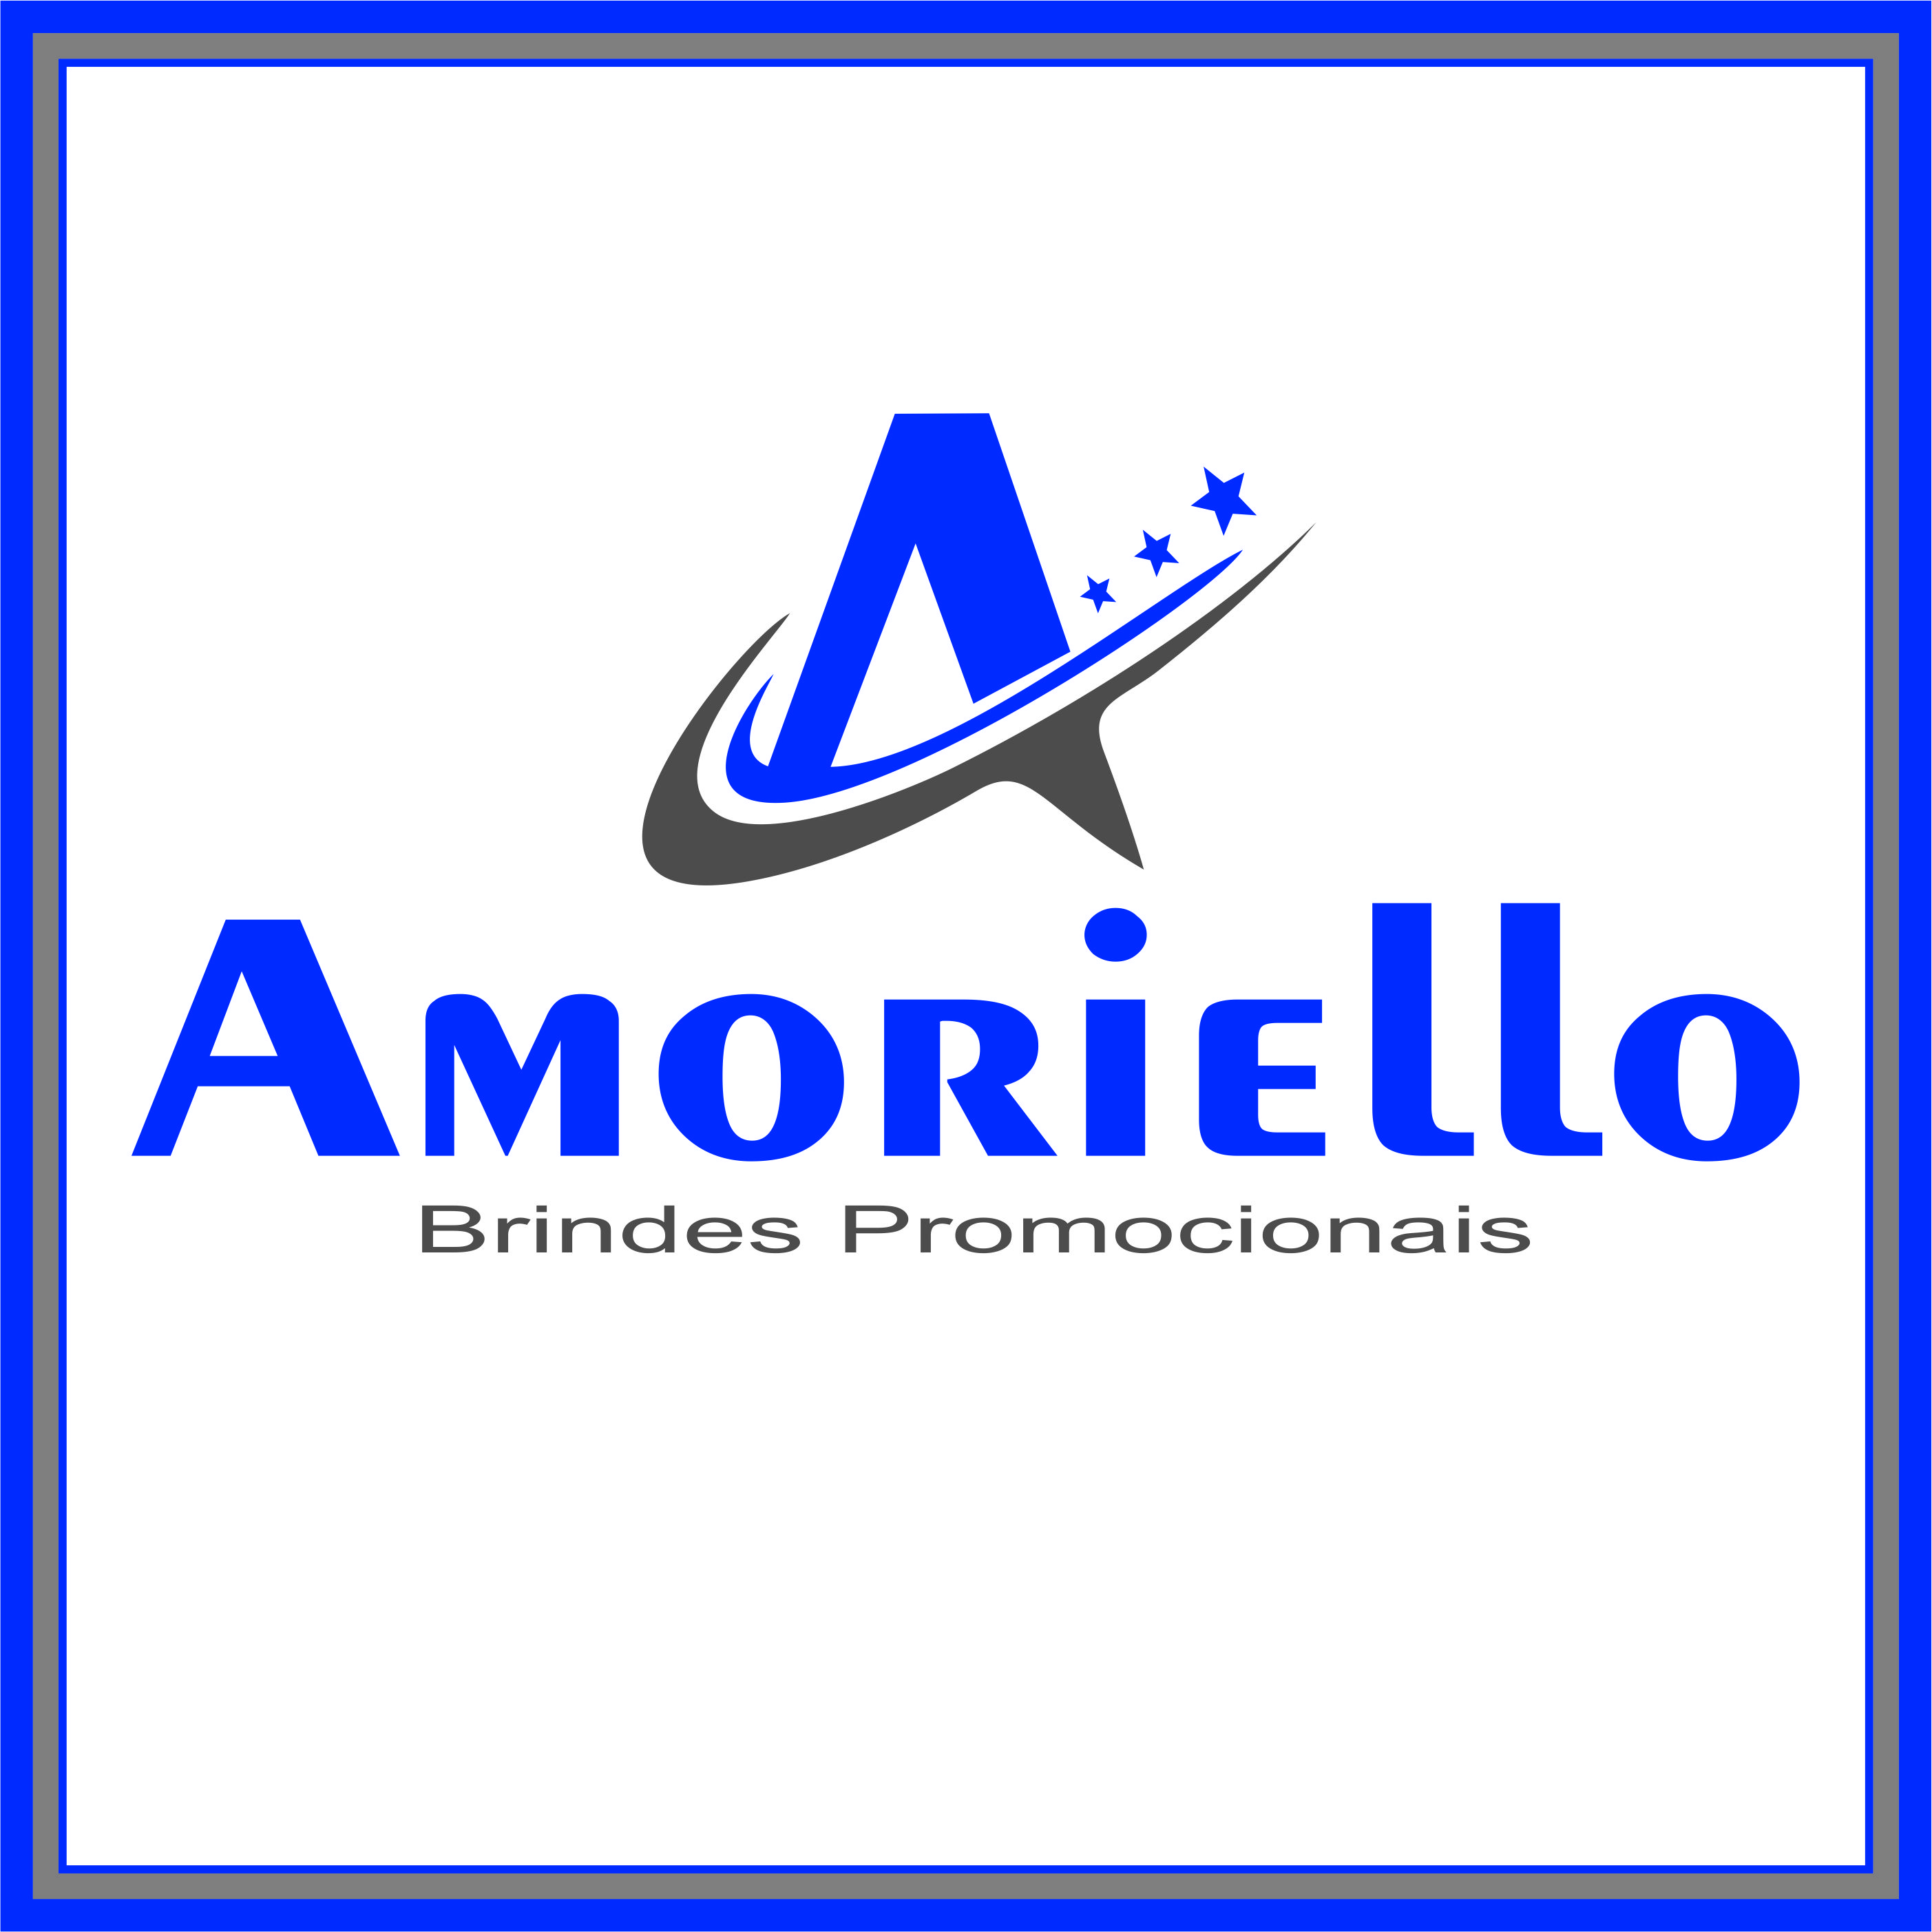 Amoriello Brindes